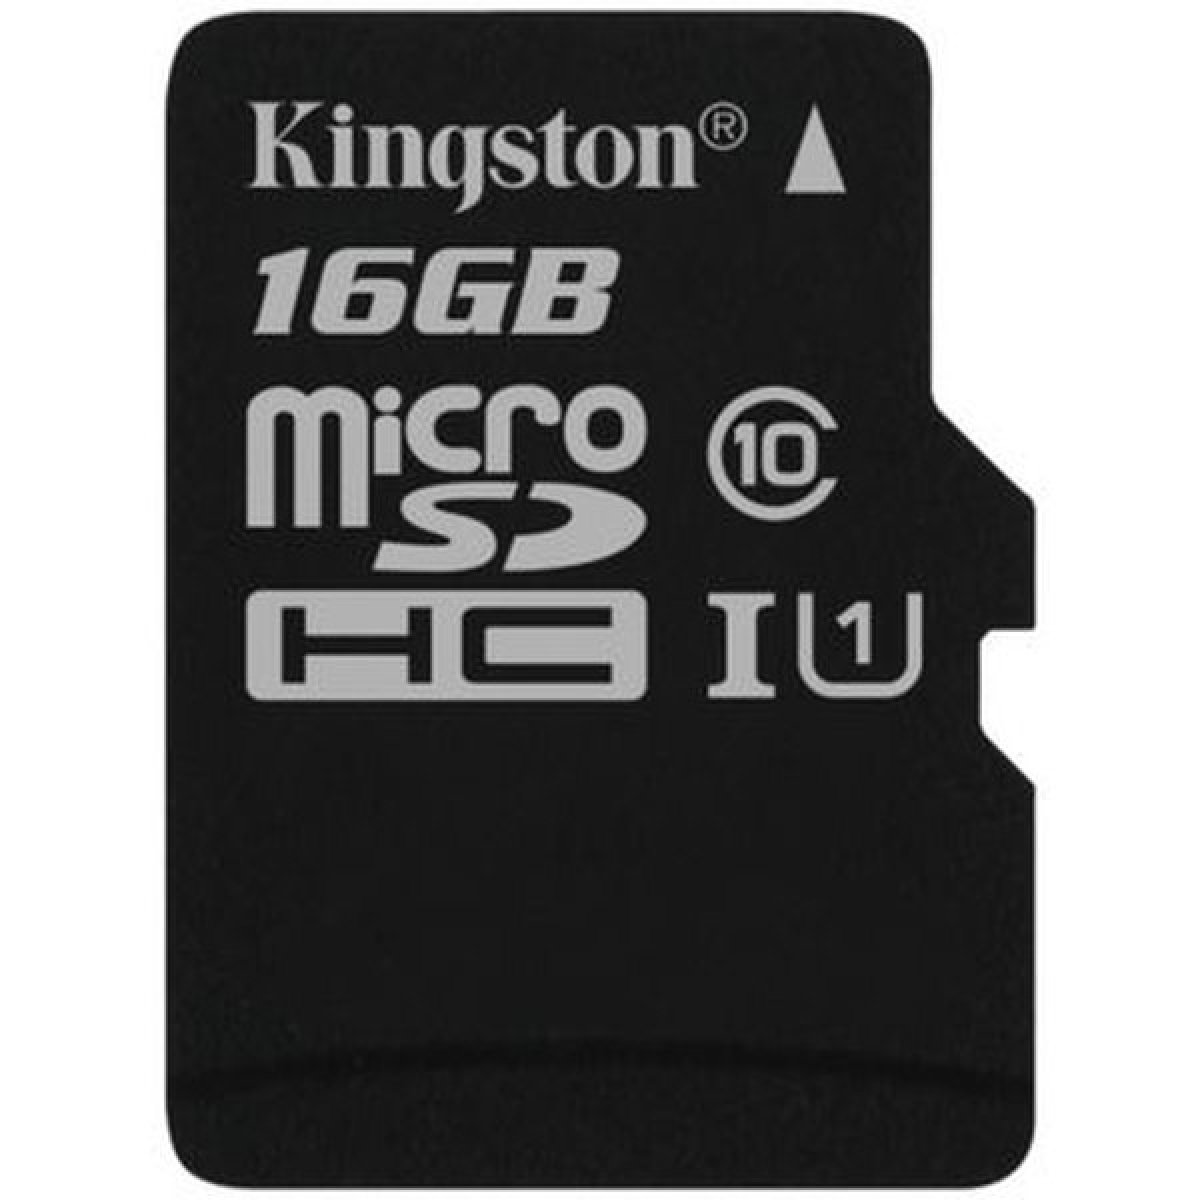 Kingston microSDHC 16GB UHS-I U1 SDC10G2/16GBSP od 304 Kč - Heureka.cz